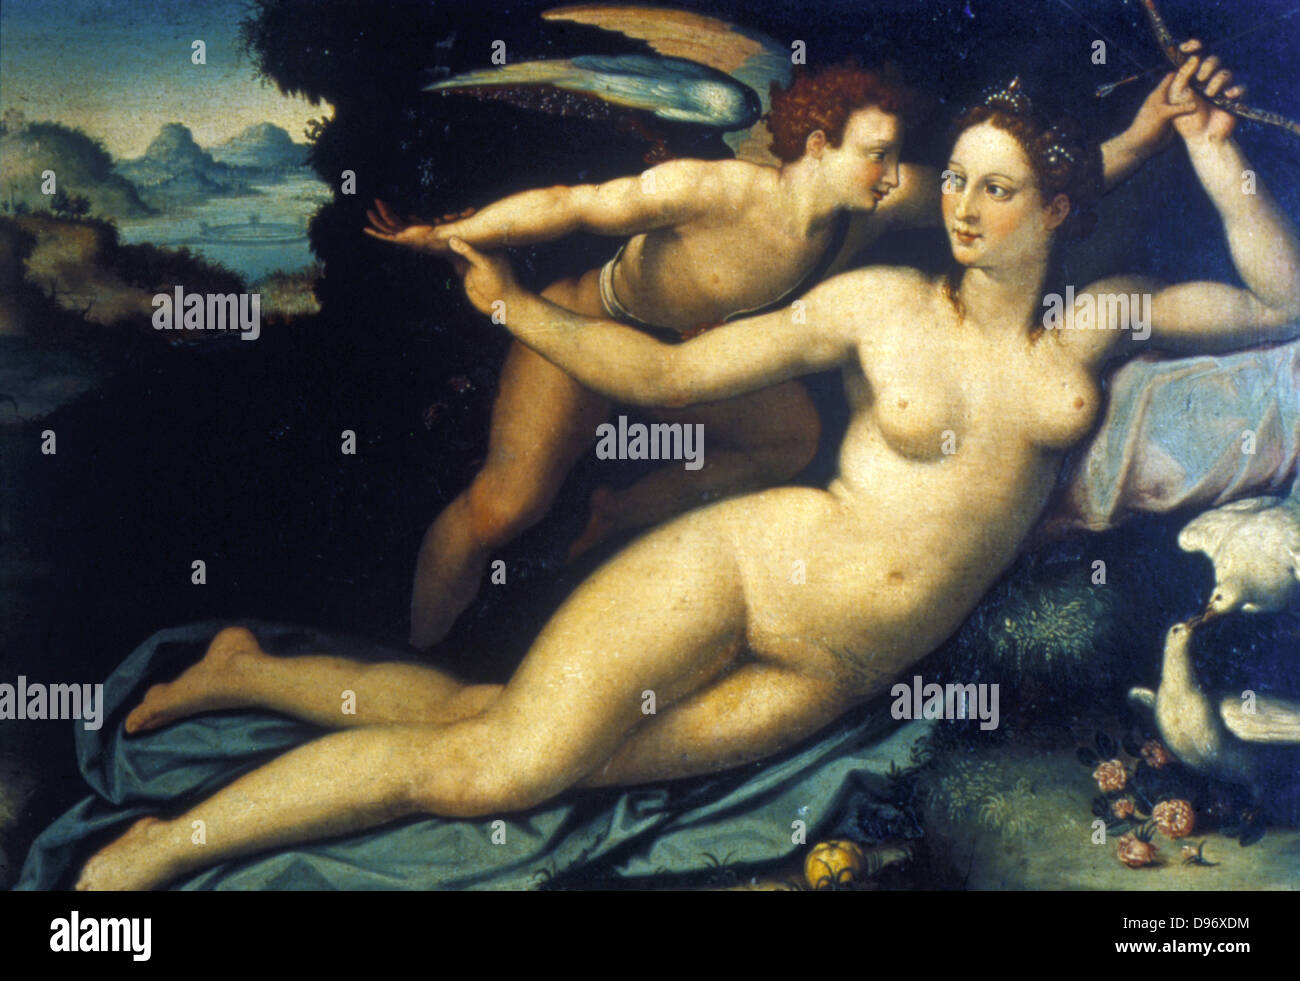 Venus and Cupid'. Alessandro Allori (Alessandro Bronzino) 1535-1607. Italian (Florentine) painter. Stock Photo